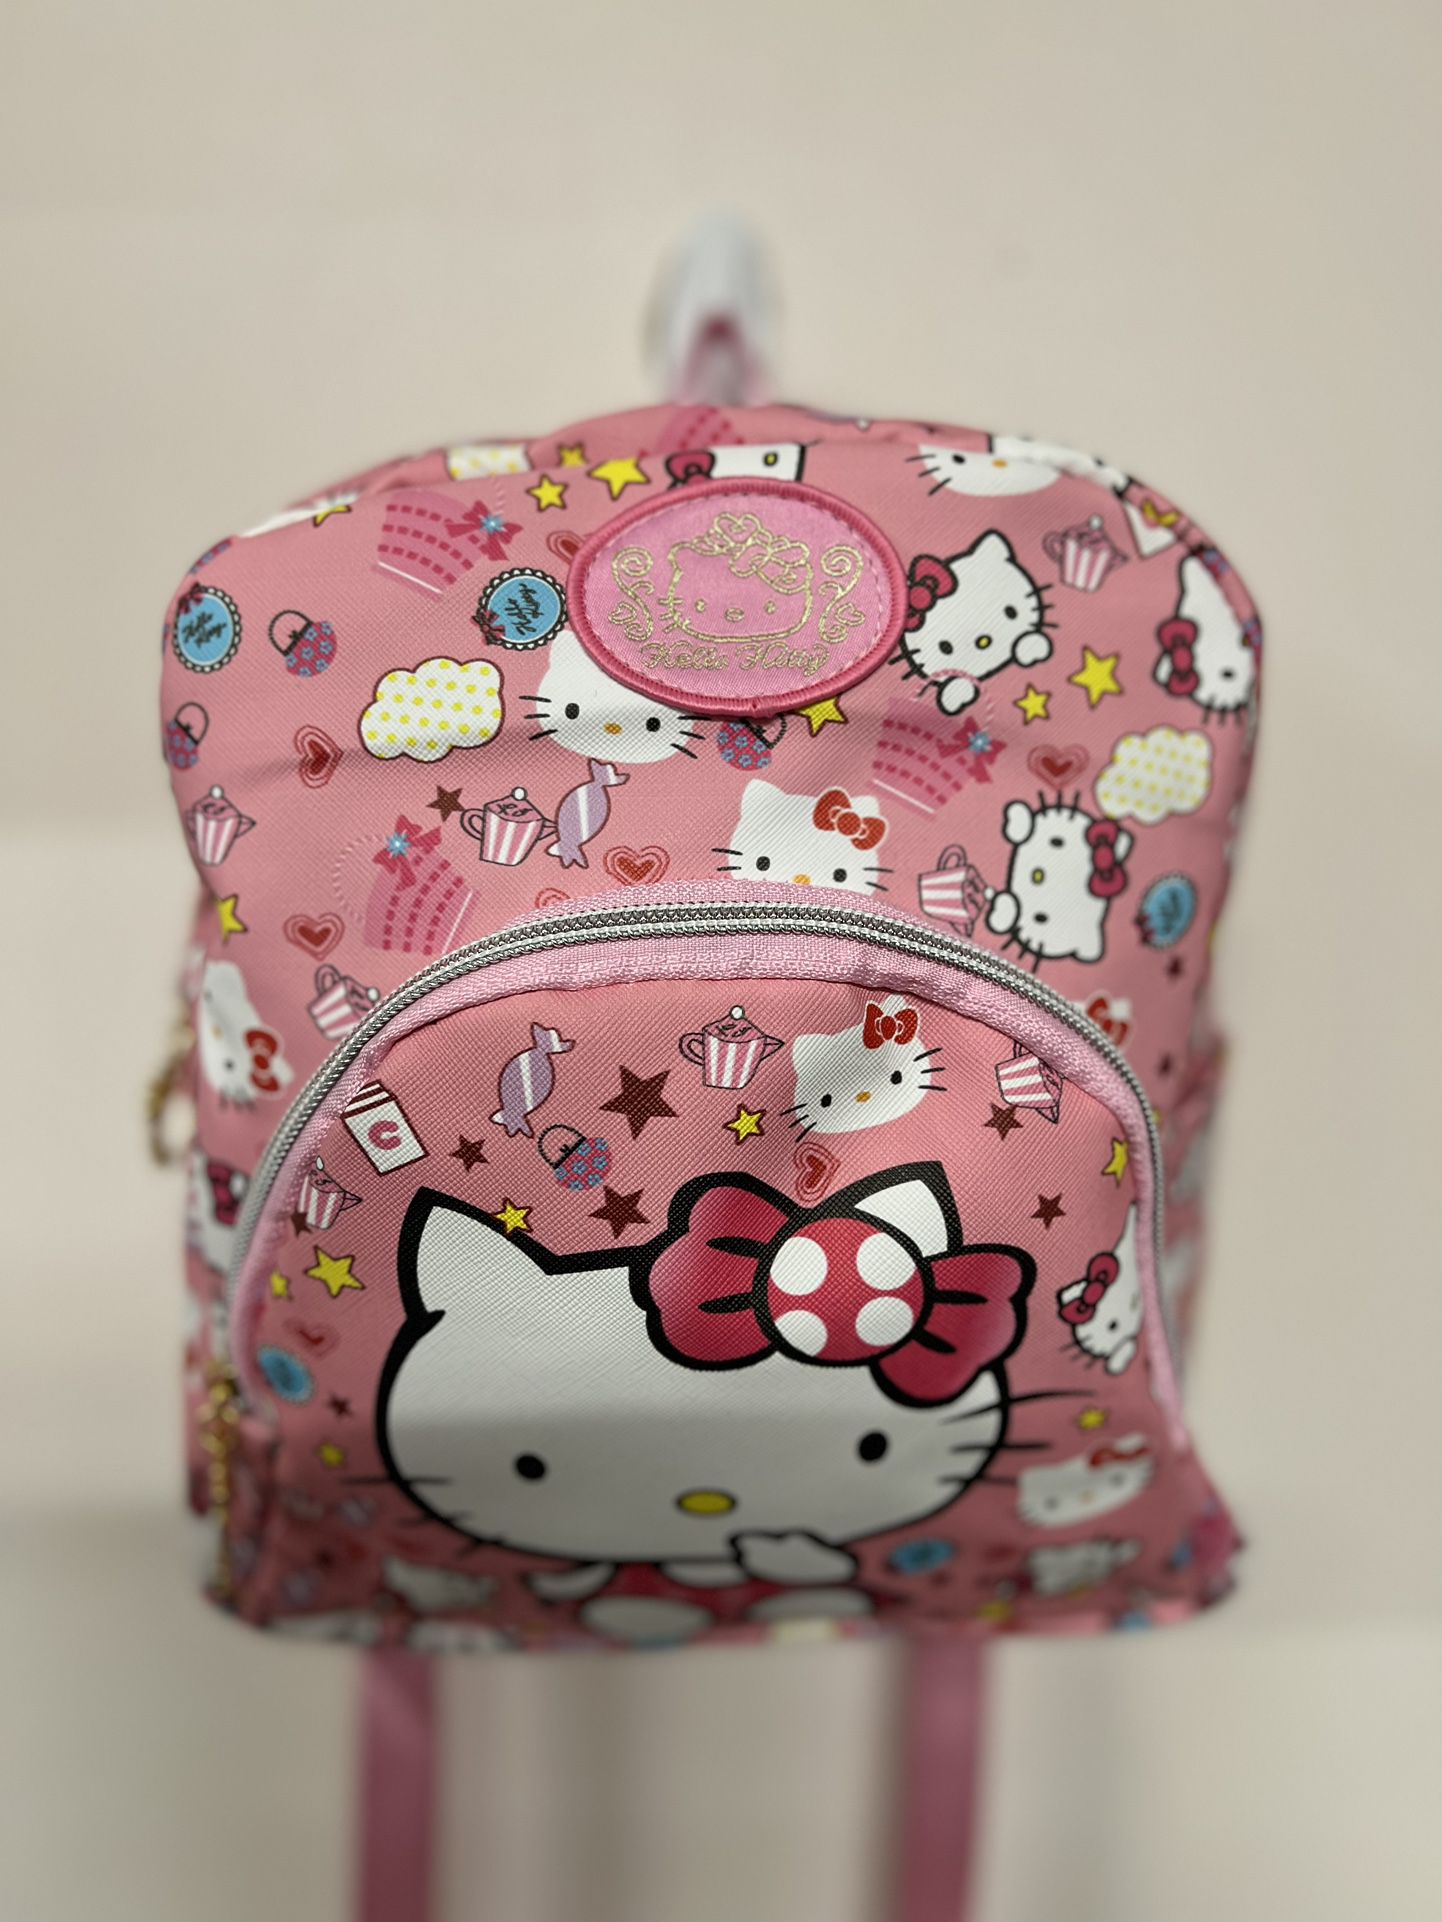  Hello Kitty Backpack 